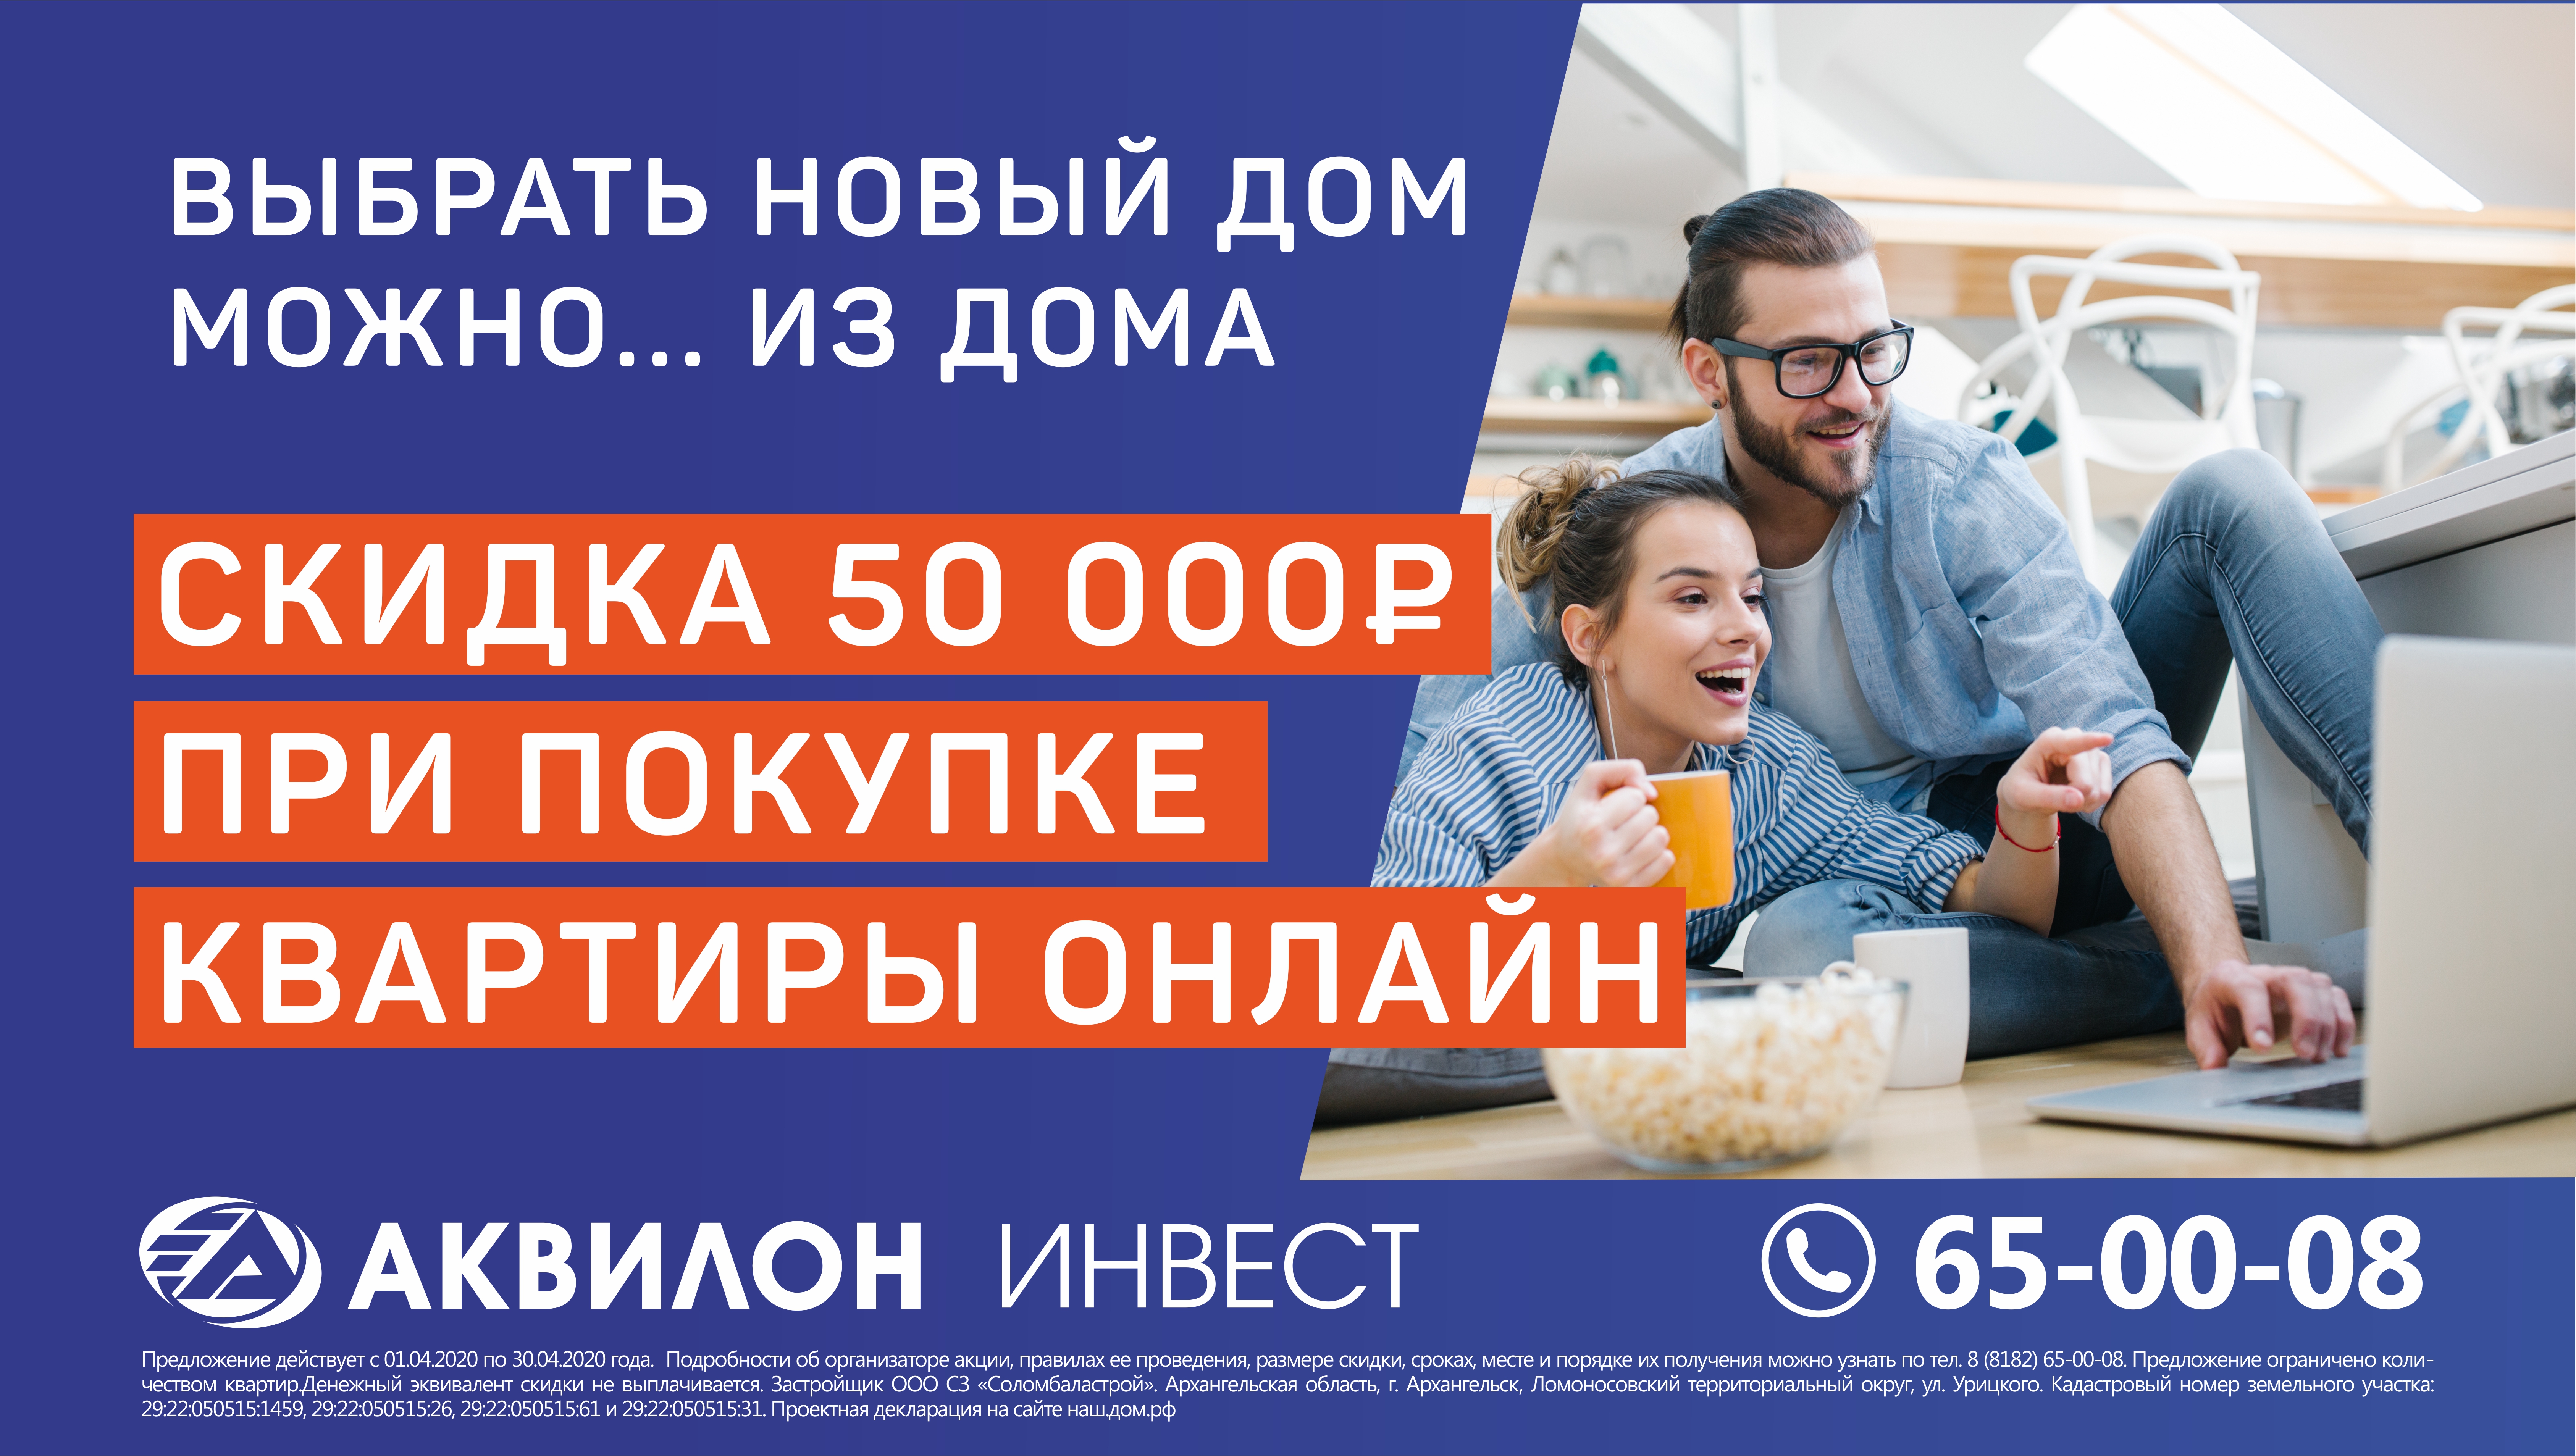 «Аквилон Инвест»: Купи квартиру онлайн – сэкономь 50 тыс. рублей